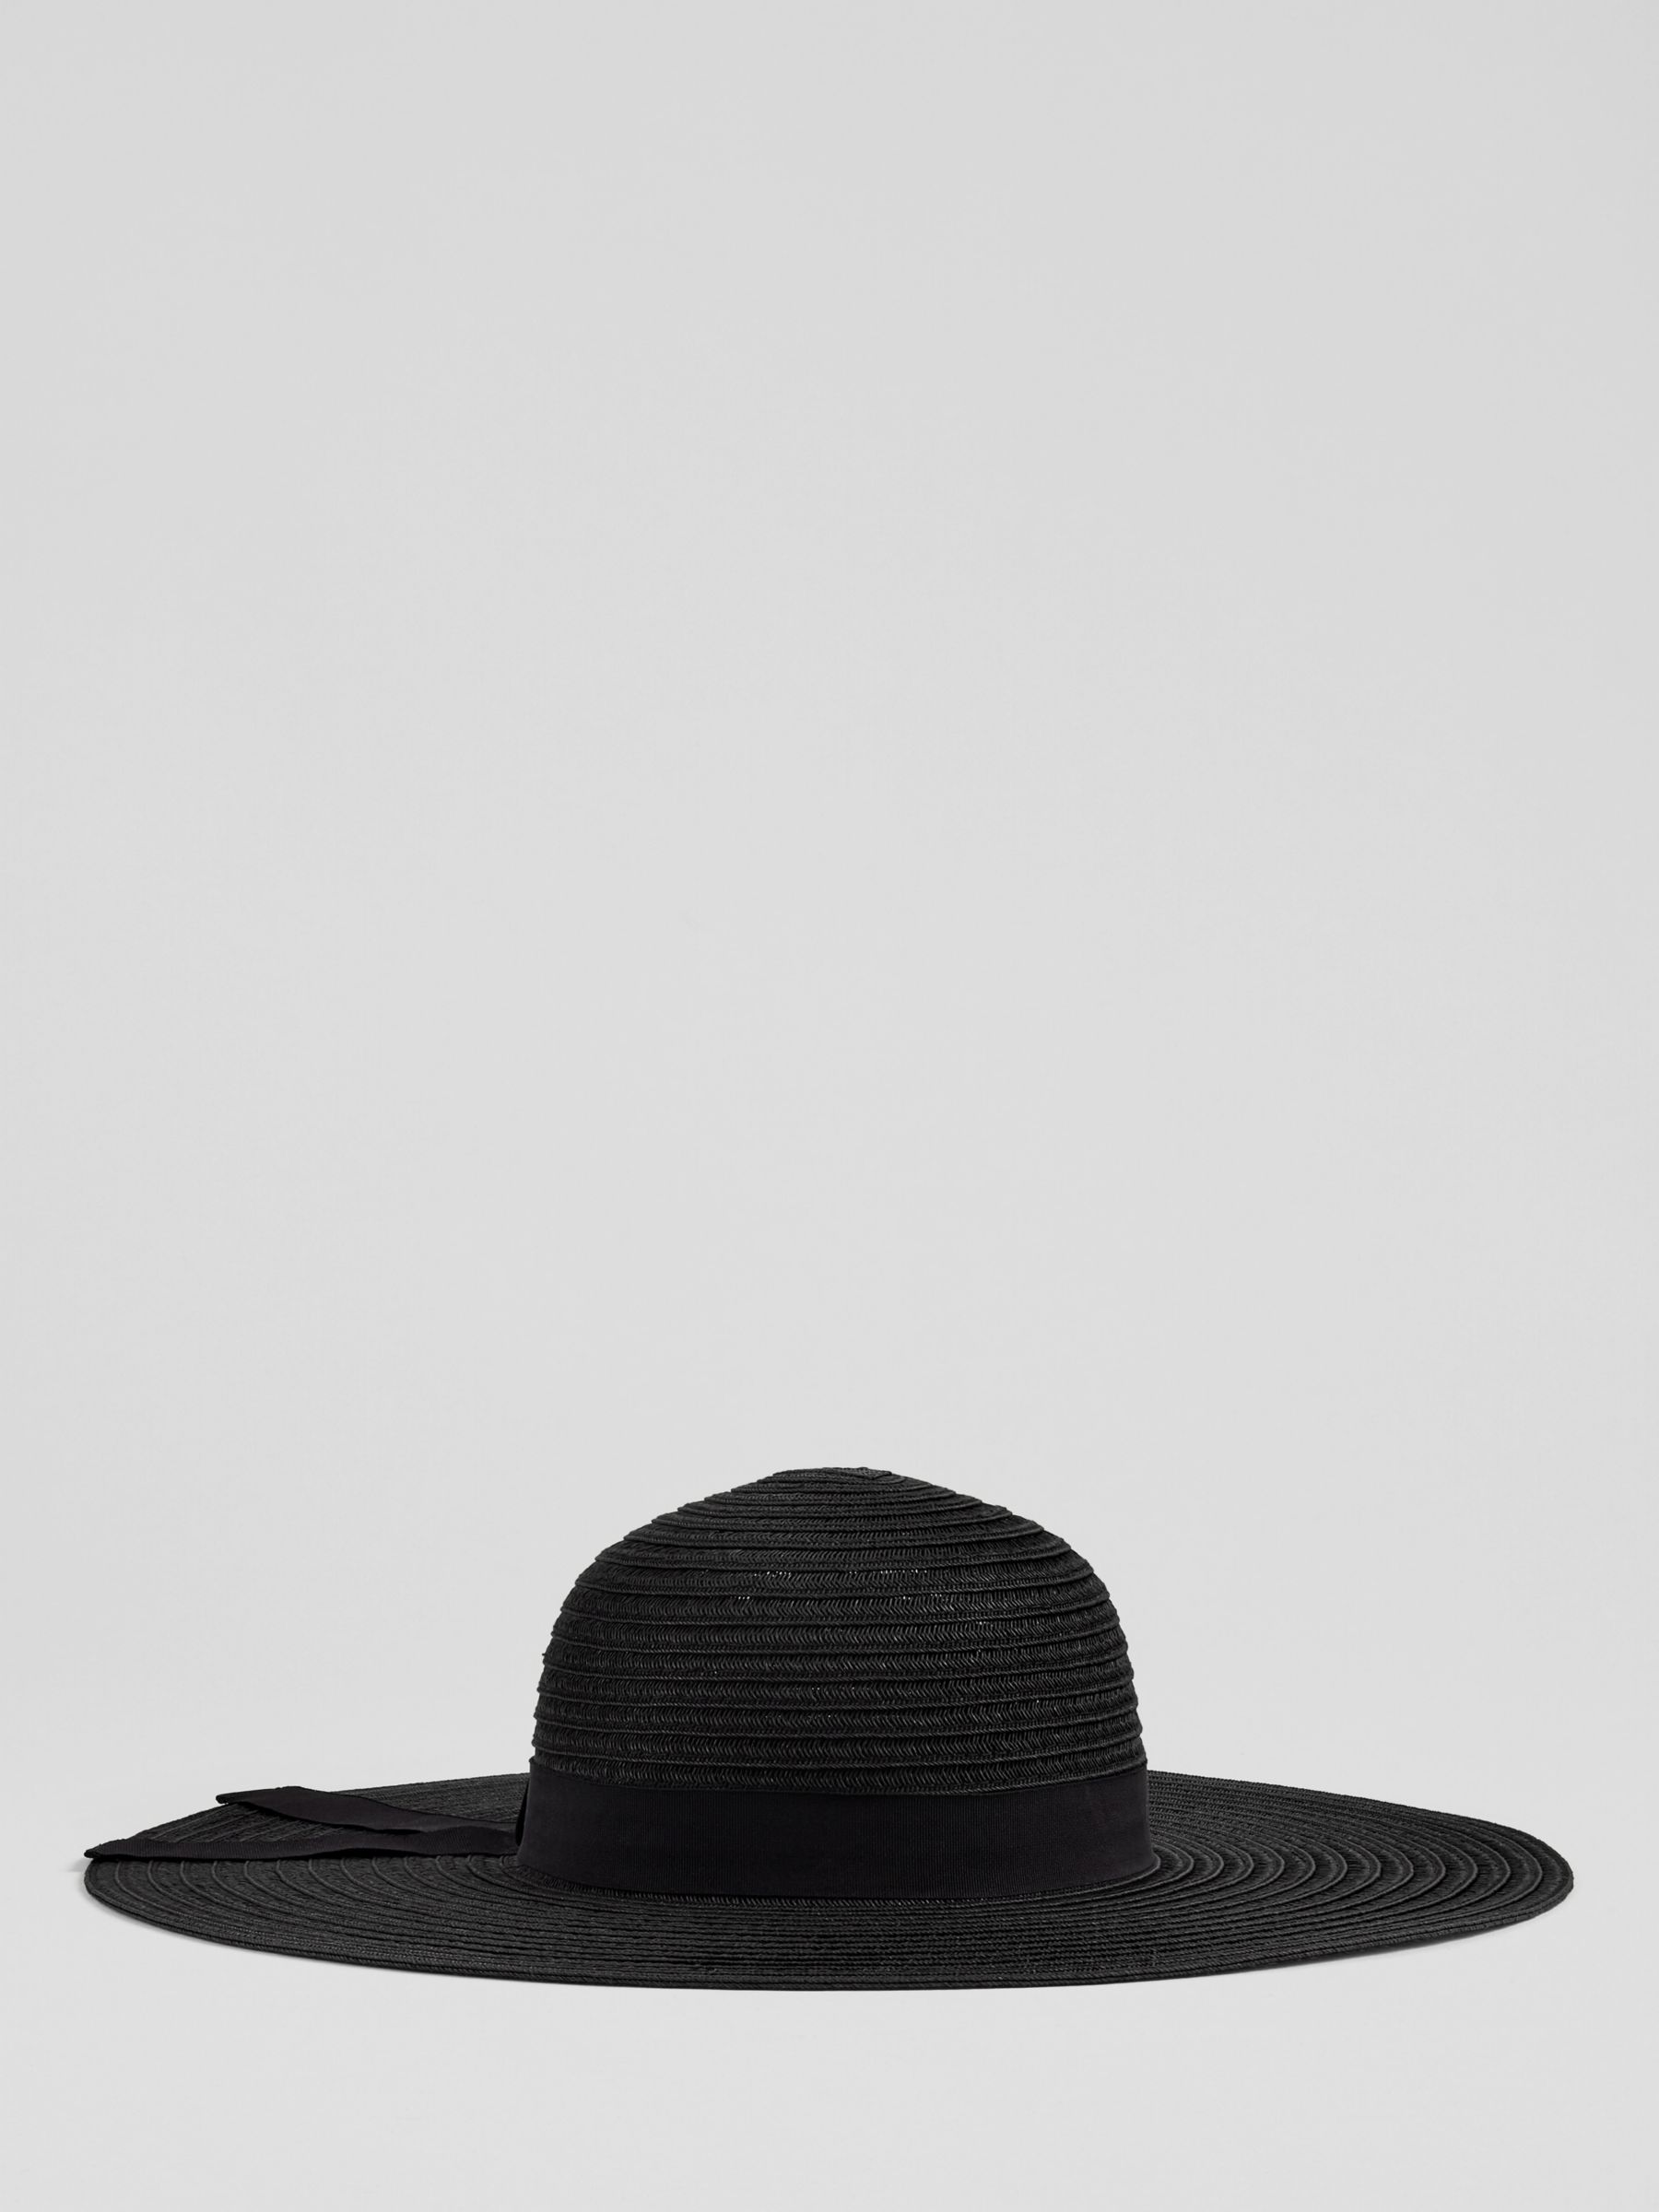 L.K.Bennett Savannah Raffia Hat, Black at John Lewis & Partners